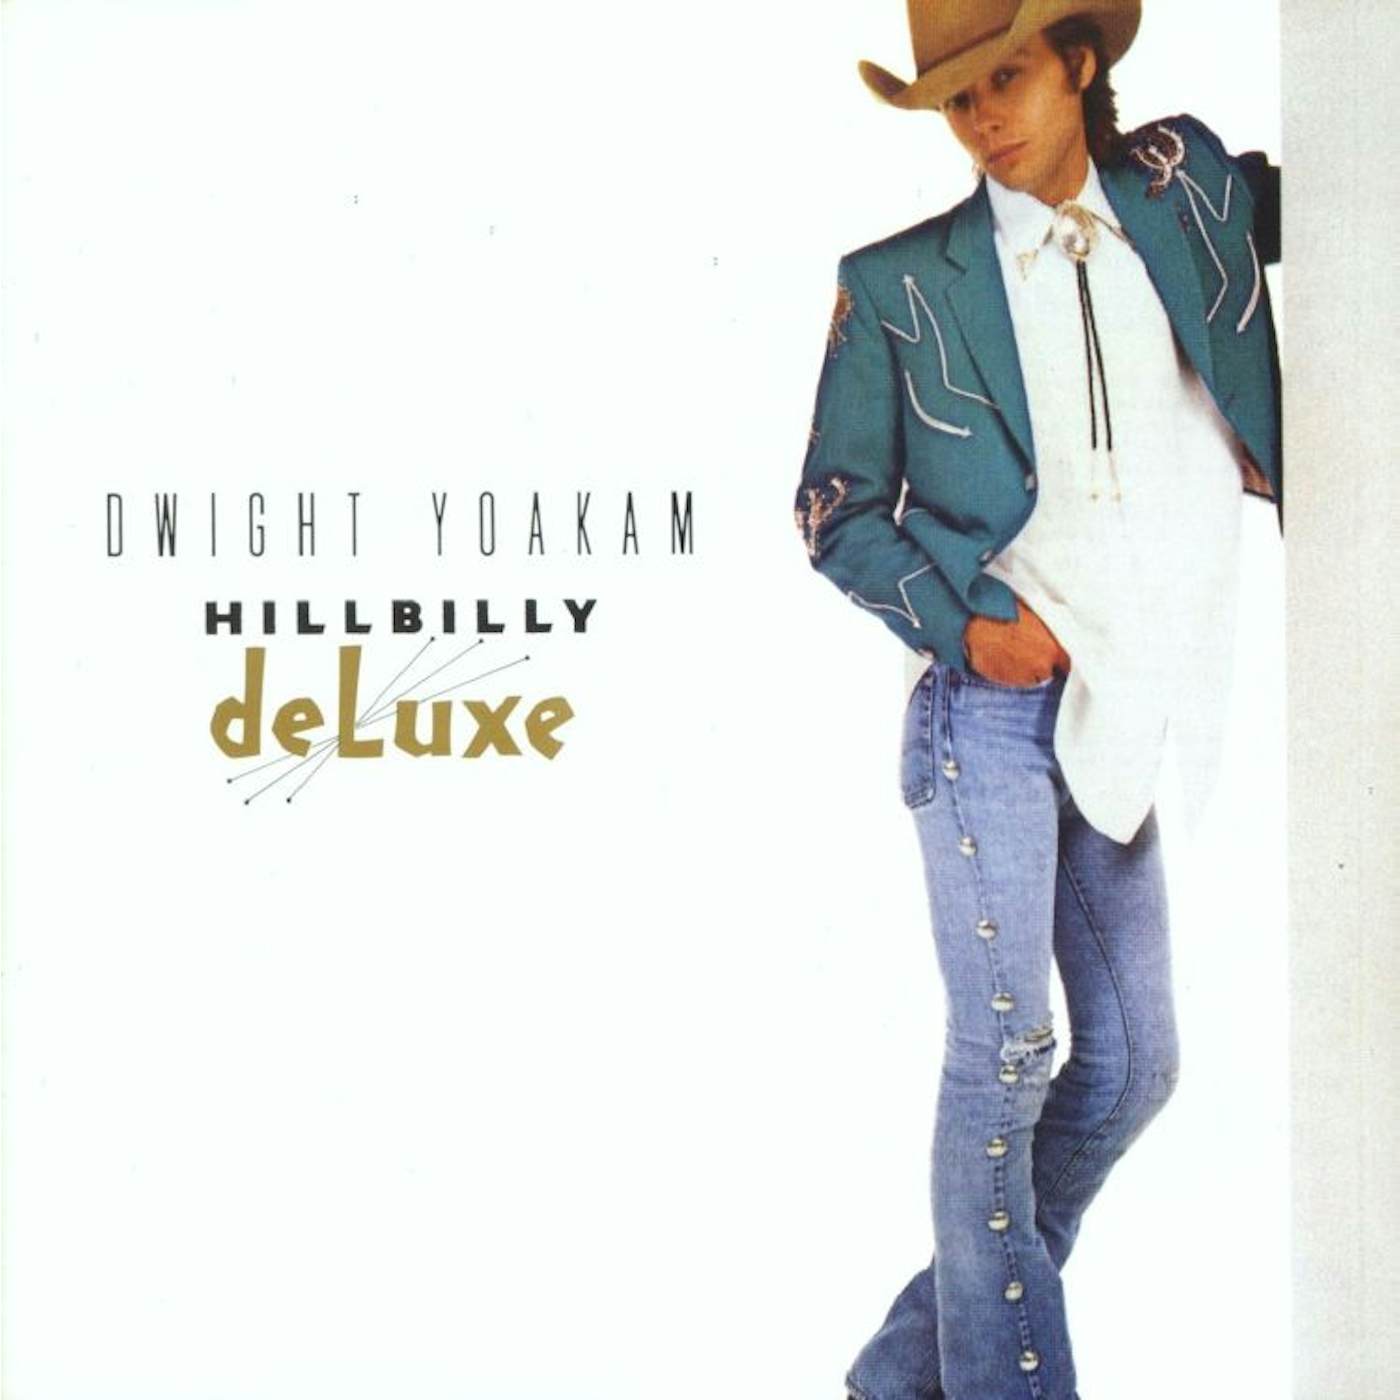 Dwight Yoakam Hillbilly Deluxe Digital Album